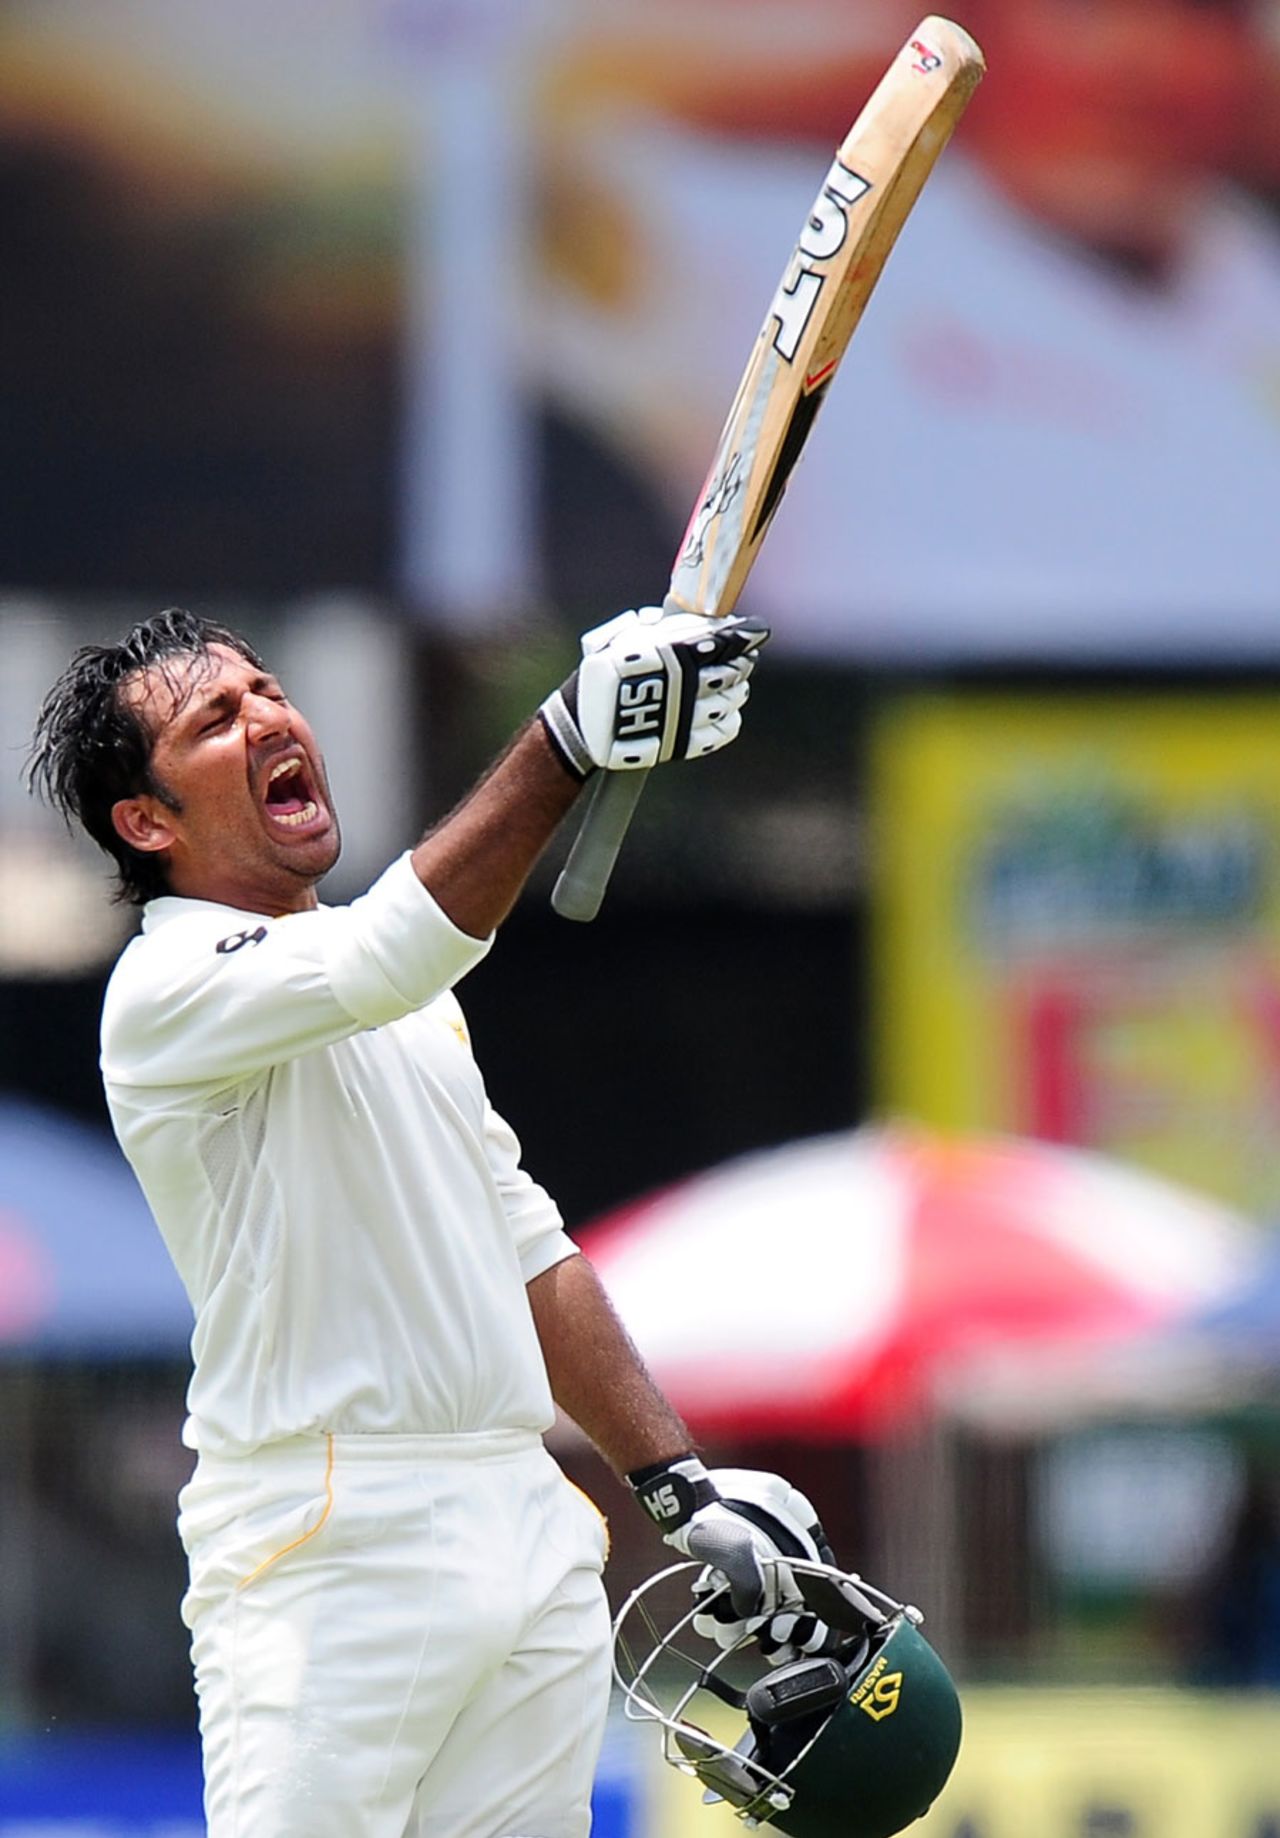 Sarfraz Ahmed is jubilant after scoring a century, Sri Lanka v Pakistan, 2nd Test, Colombo, 3rd day, August 16, 2014